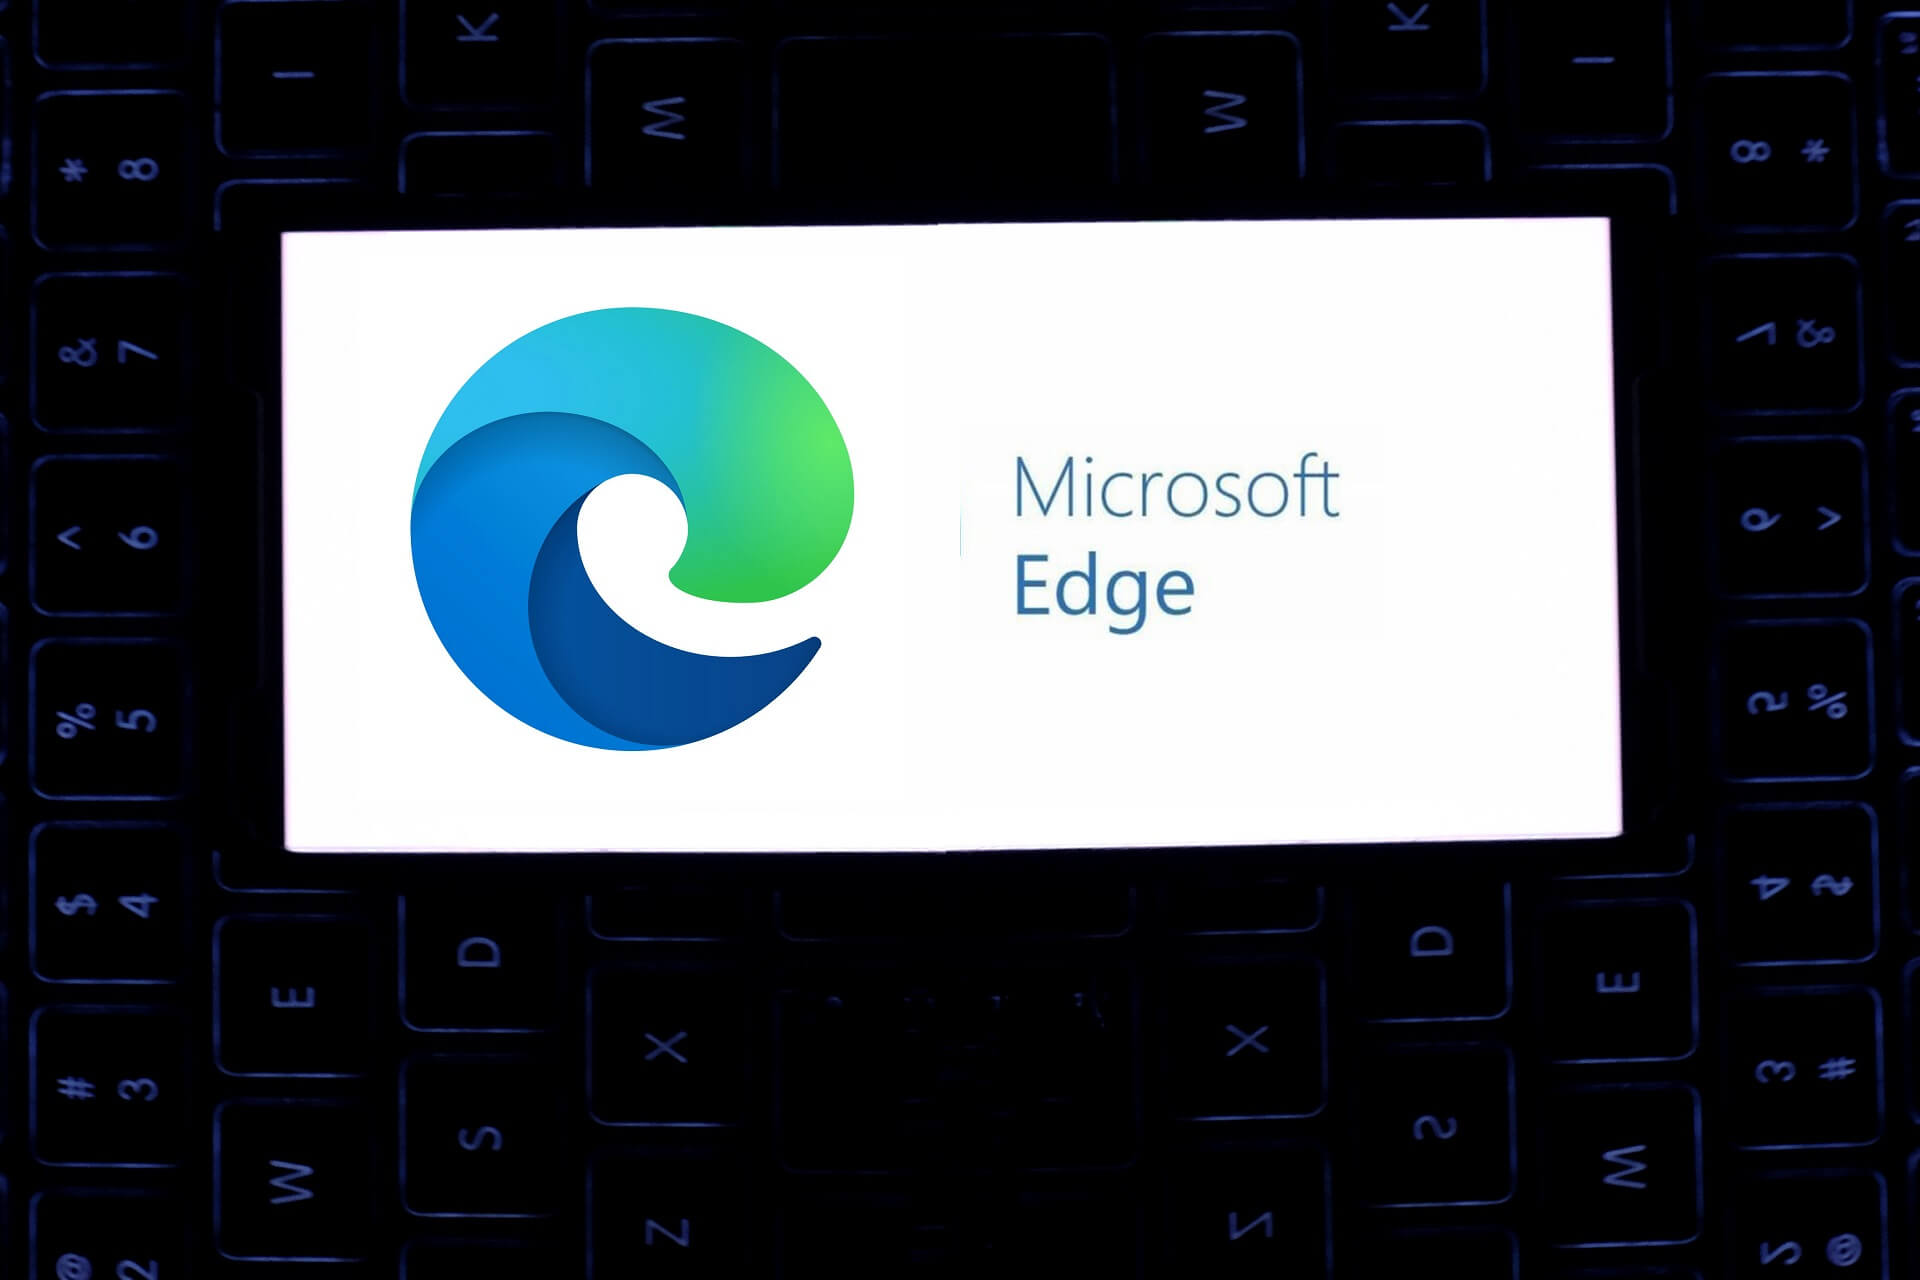 Microsoft recommends Edge through Windows 10 Search